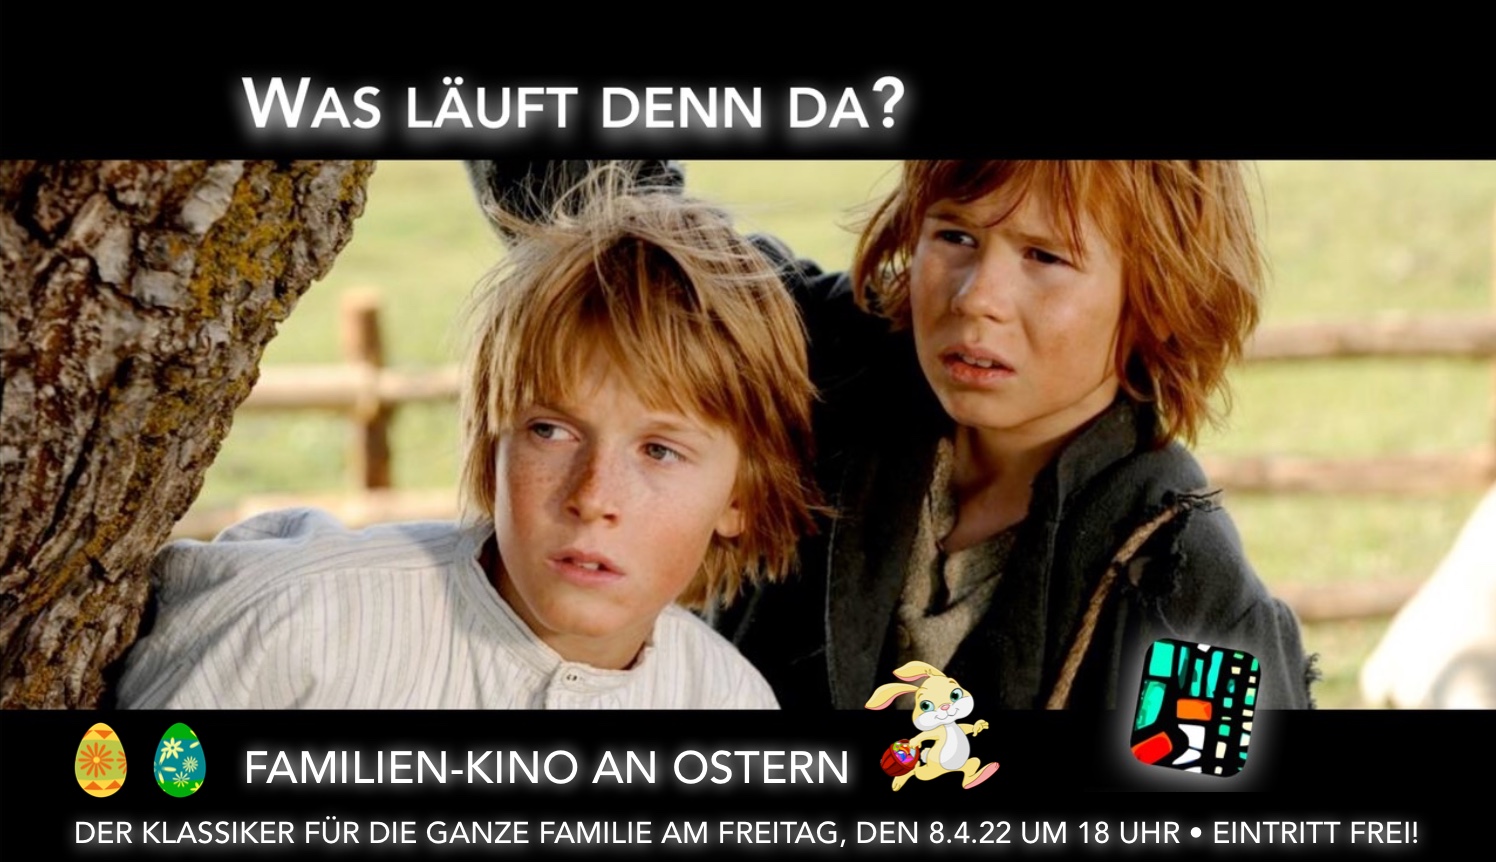 Was läuft denn da? Familien-Kino an Ostern (c) pixabay.de